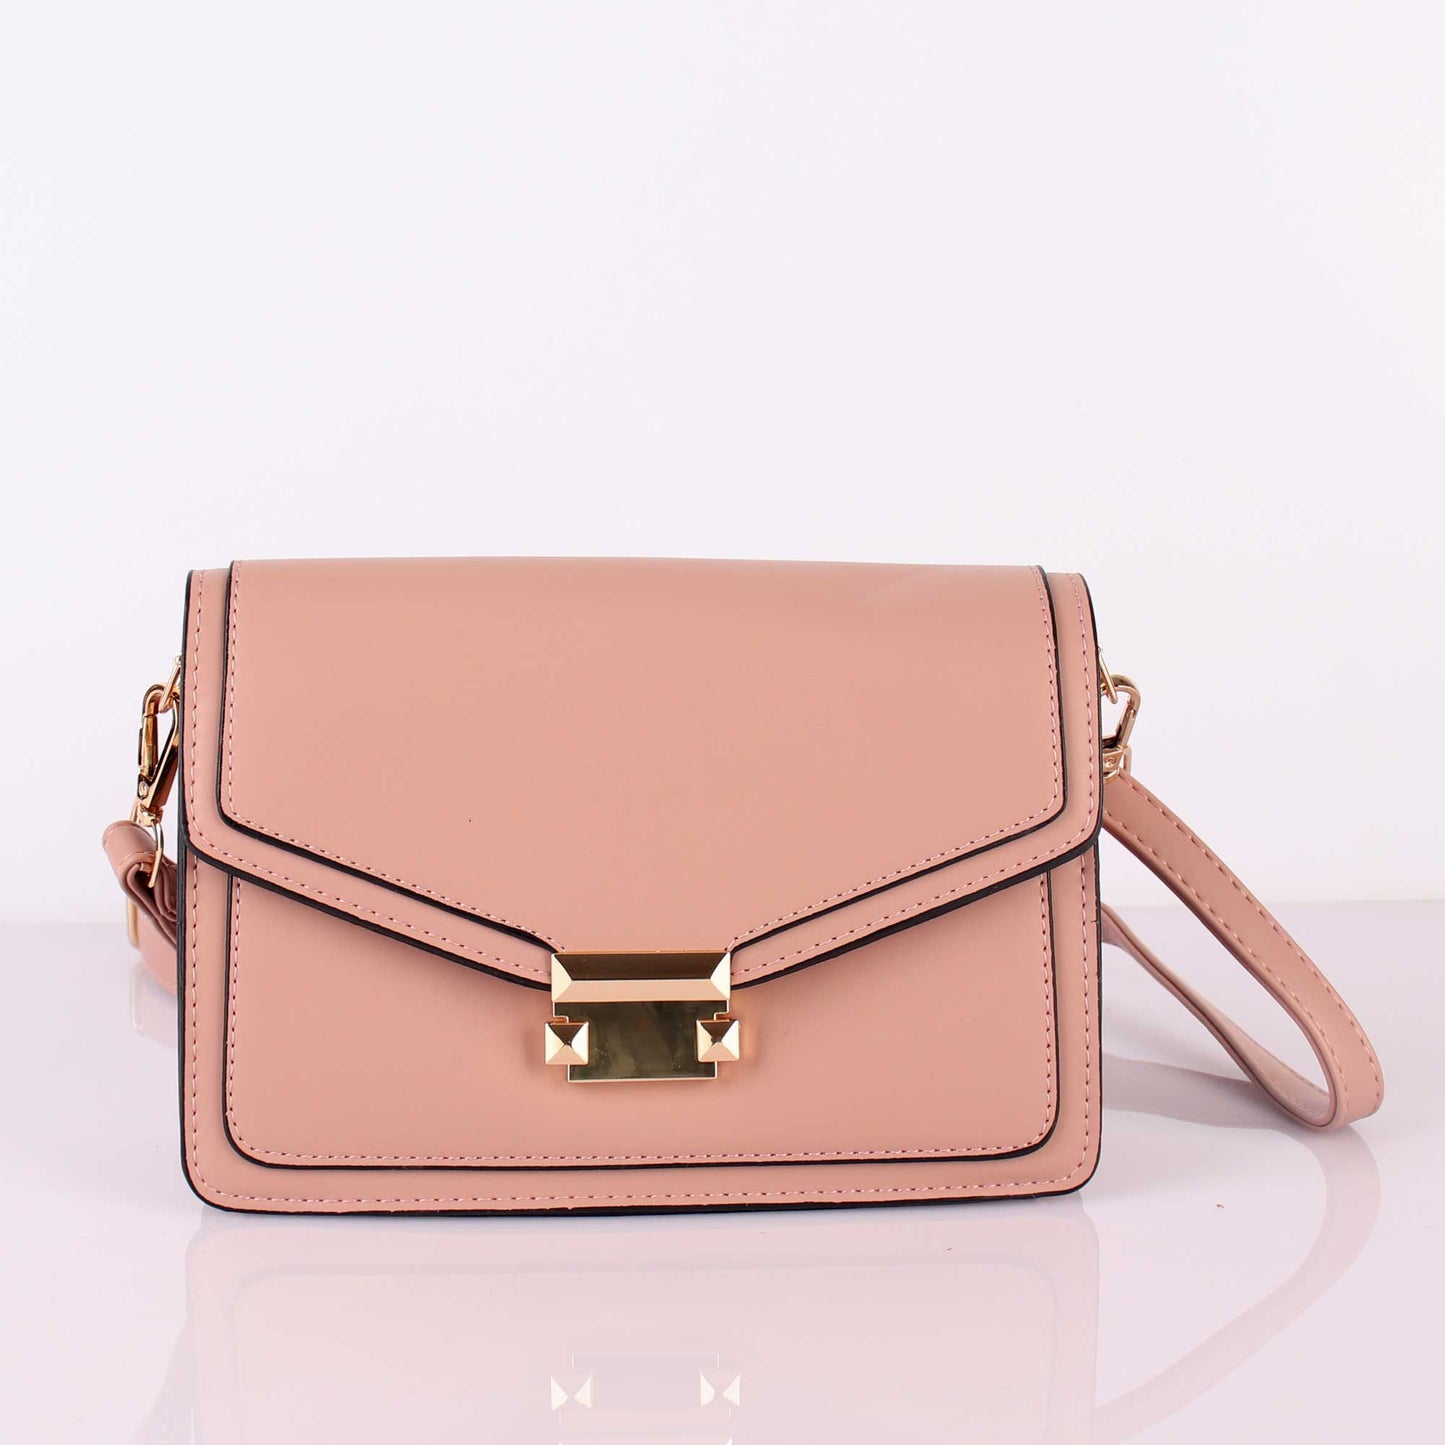 The Sassy Envelope Pink Sling Bag